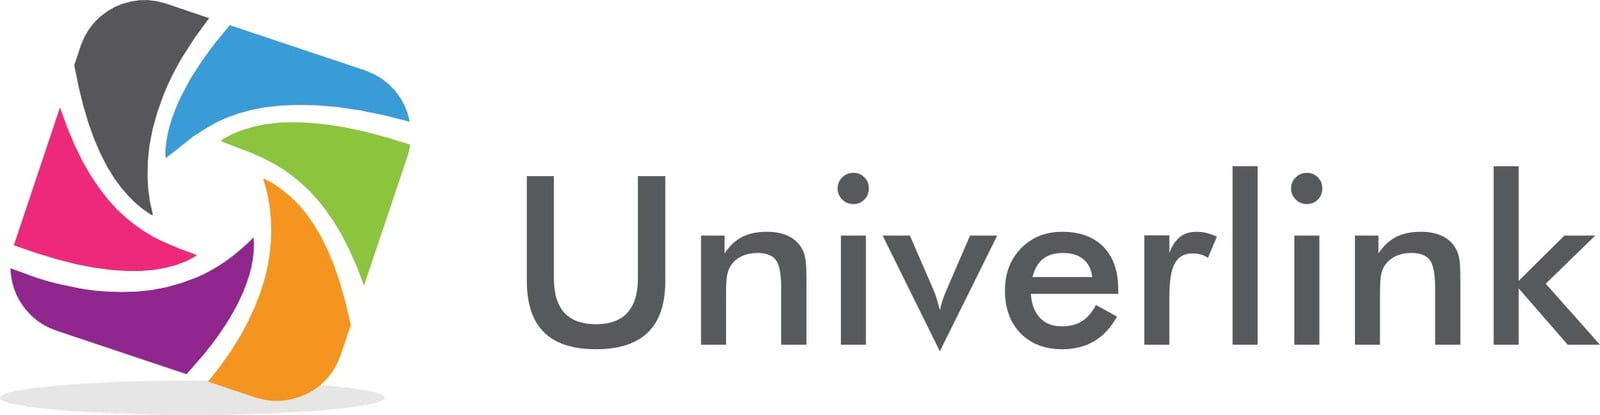 Univerlink Official Site